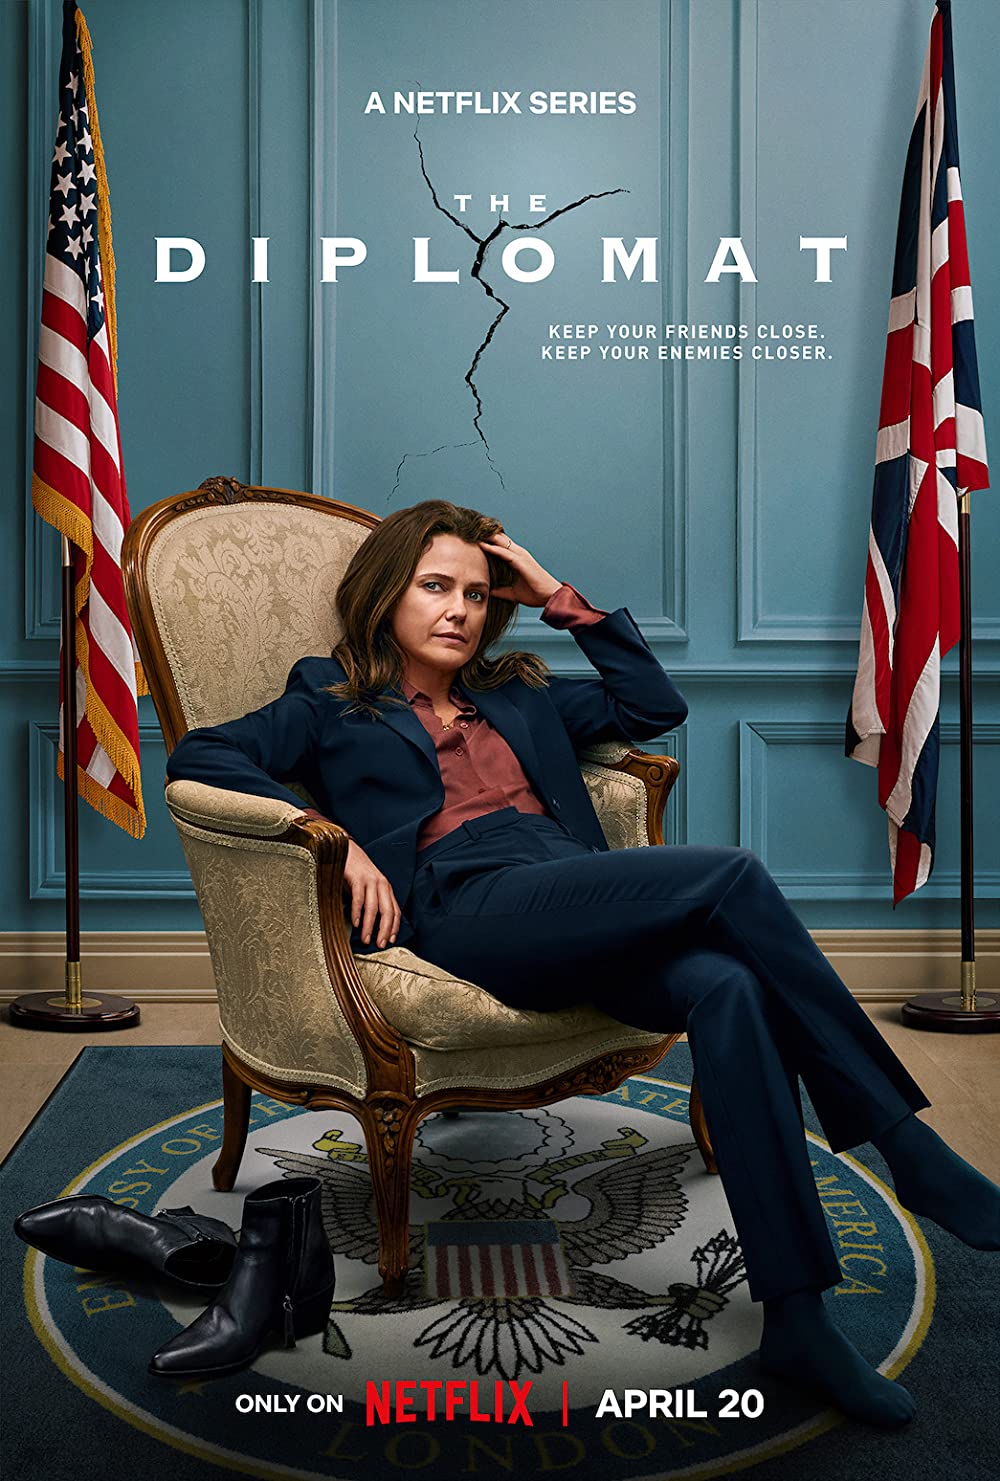 [TV] The Diplomat Season 1 (Netflix)